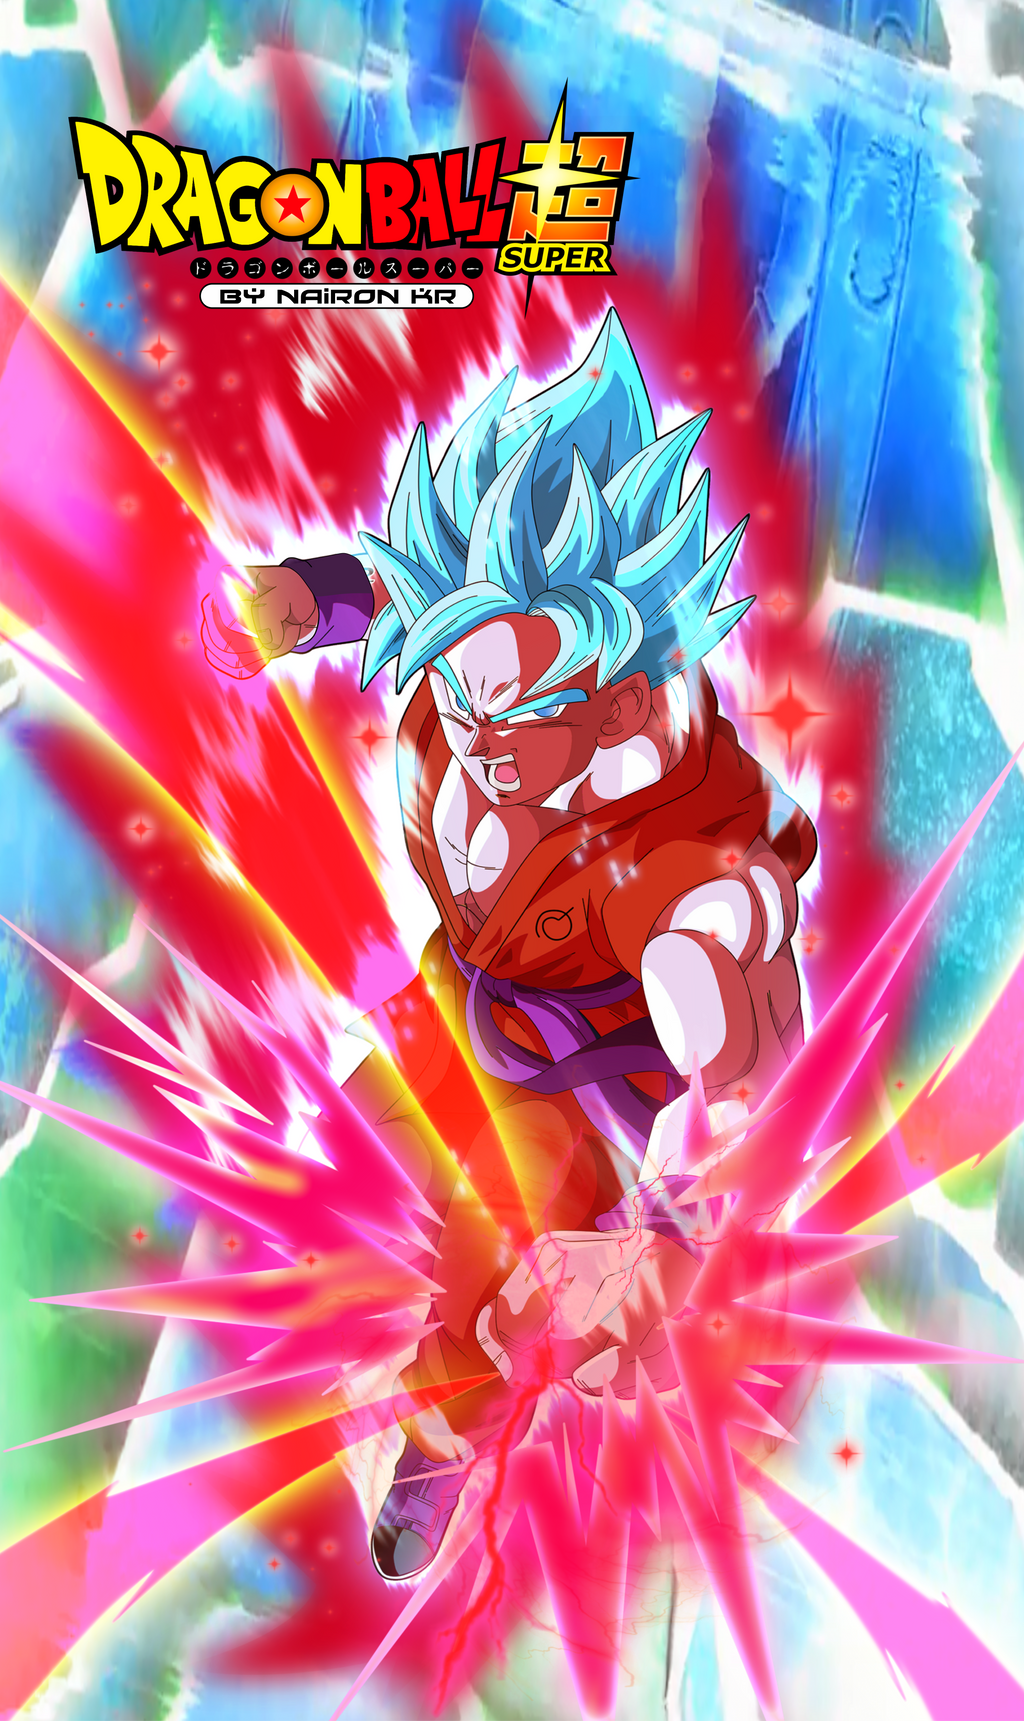 Son Goku Super Saiyan Blue (Kaioken Animation) by M3ruem on DeviantArt